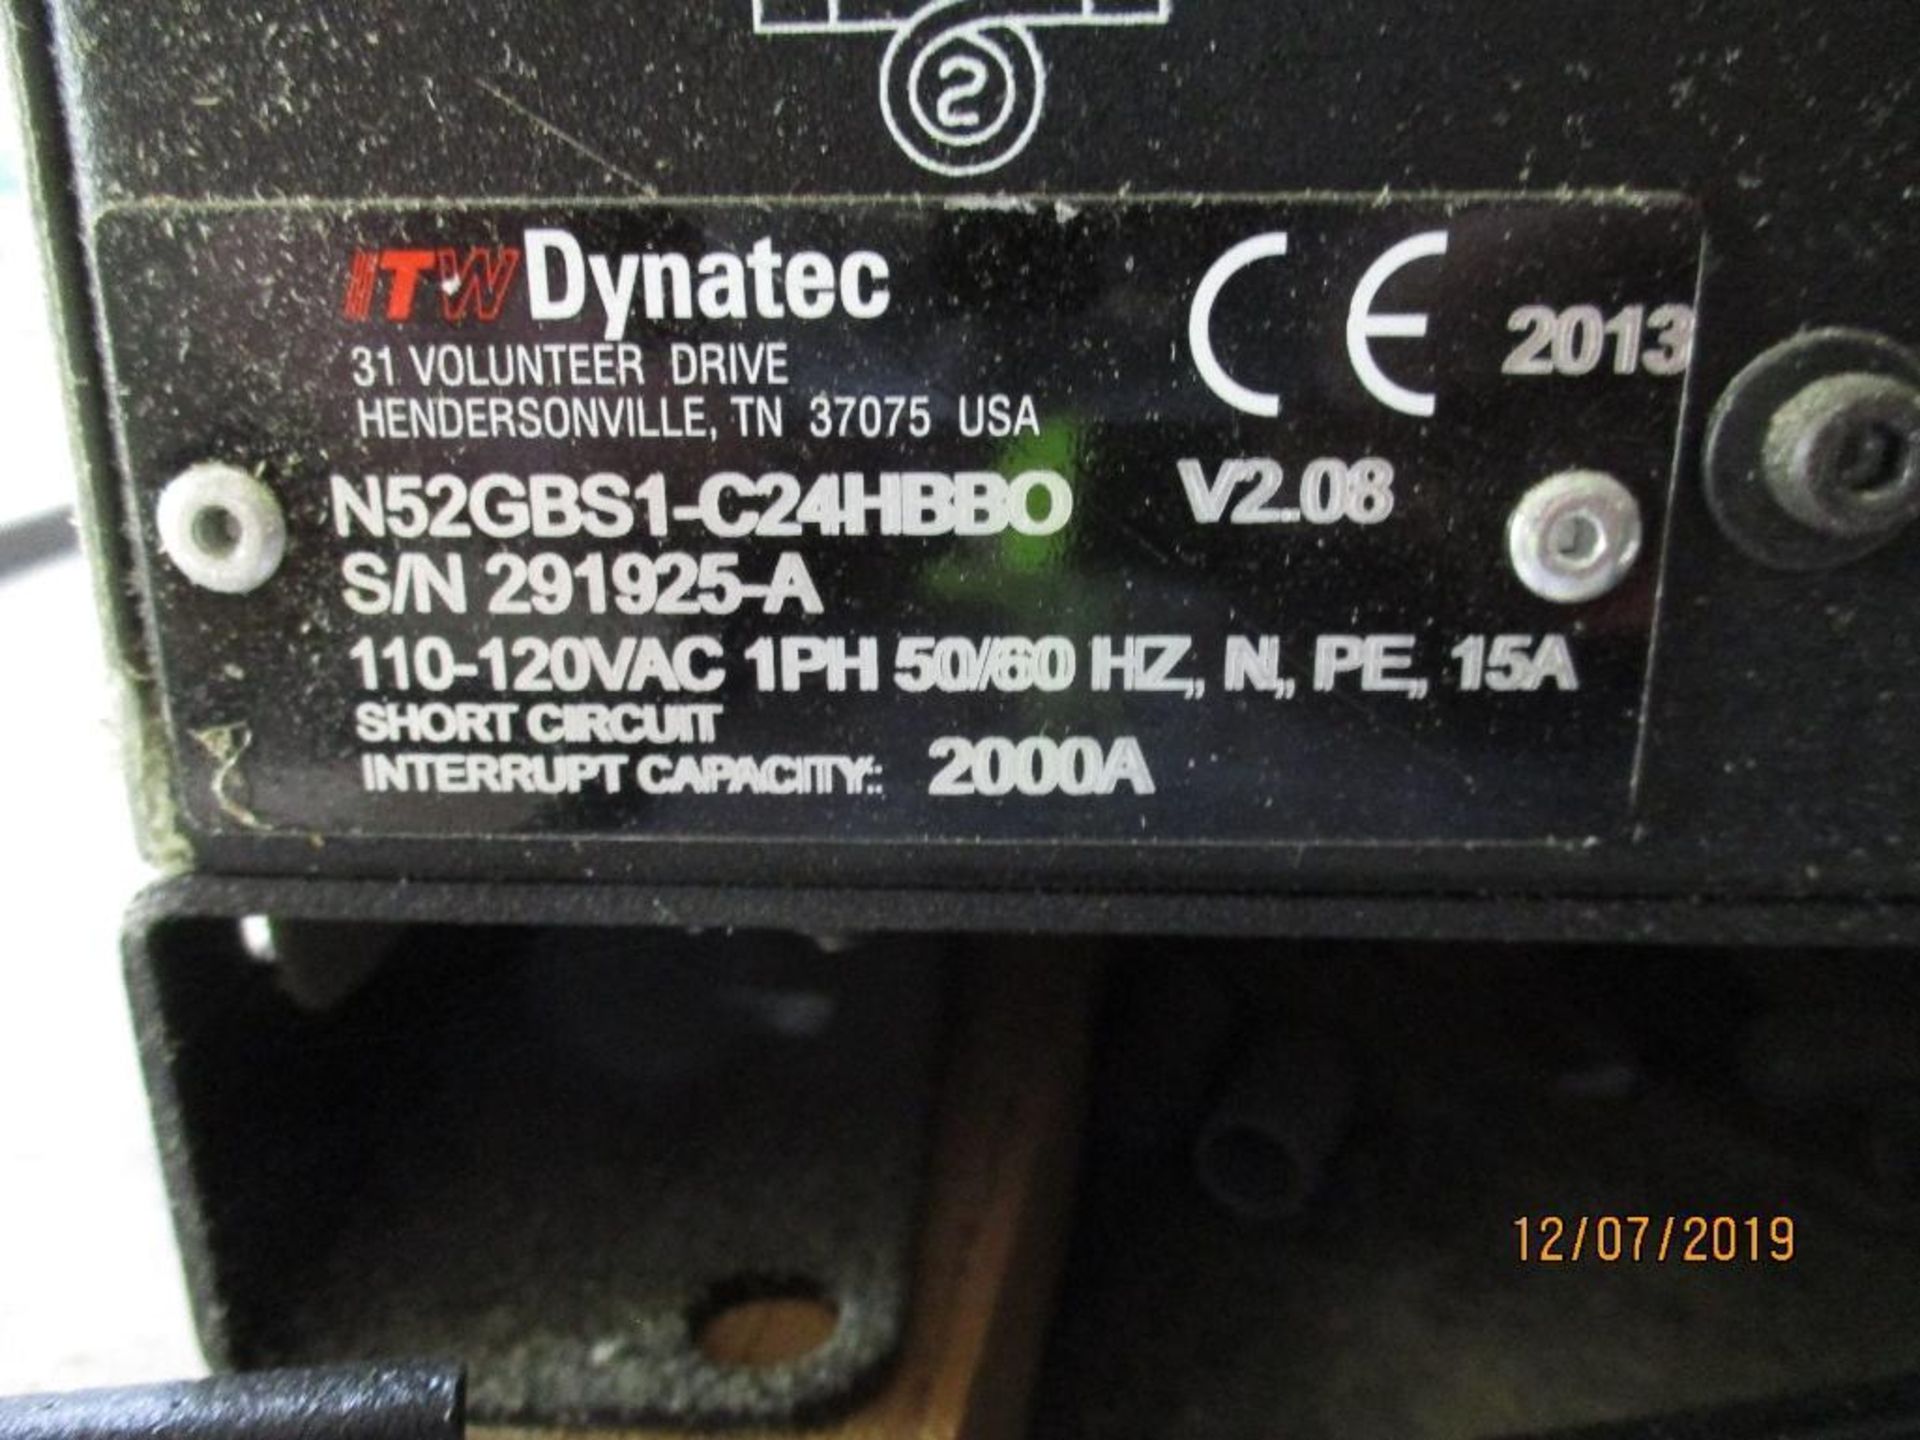 ITW Dynatec Dynamini Adhesive Supply Unit M/N N52GBS1-C24HBBO S/N 291925-A - Image 4 of 5